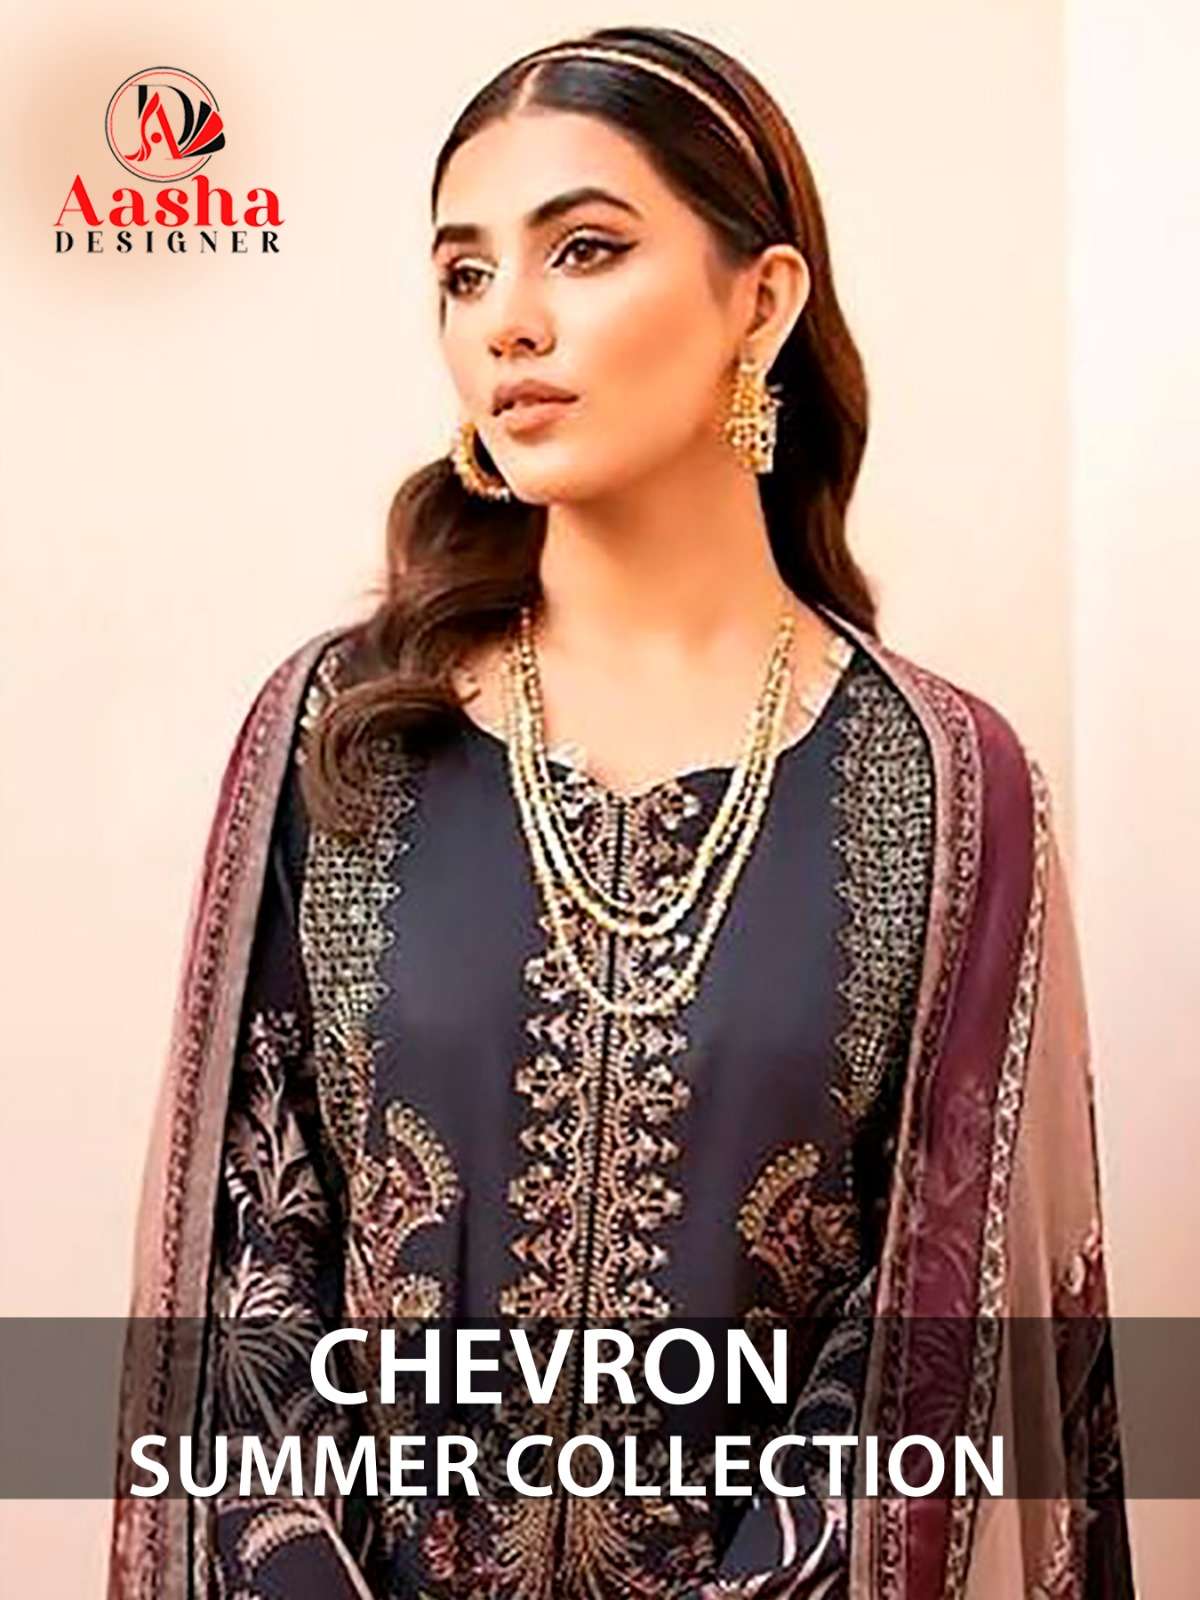 Aasha Designer Chevron Summer Collection Pakistani Cotton Dress Catalog Dealers